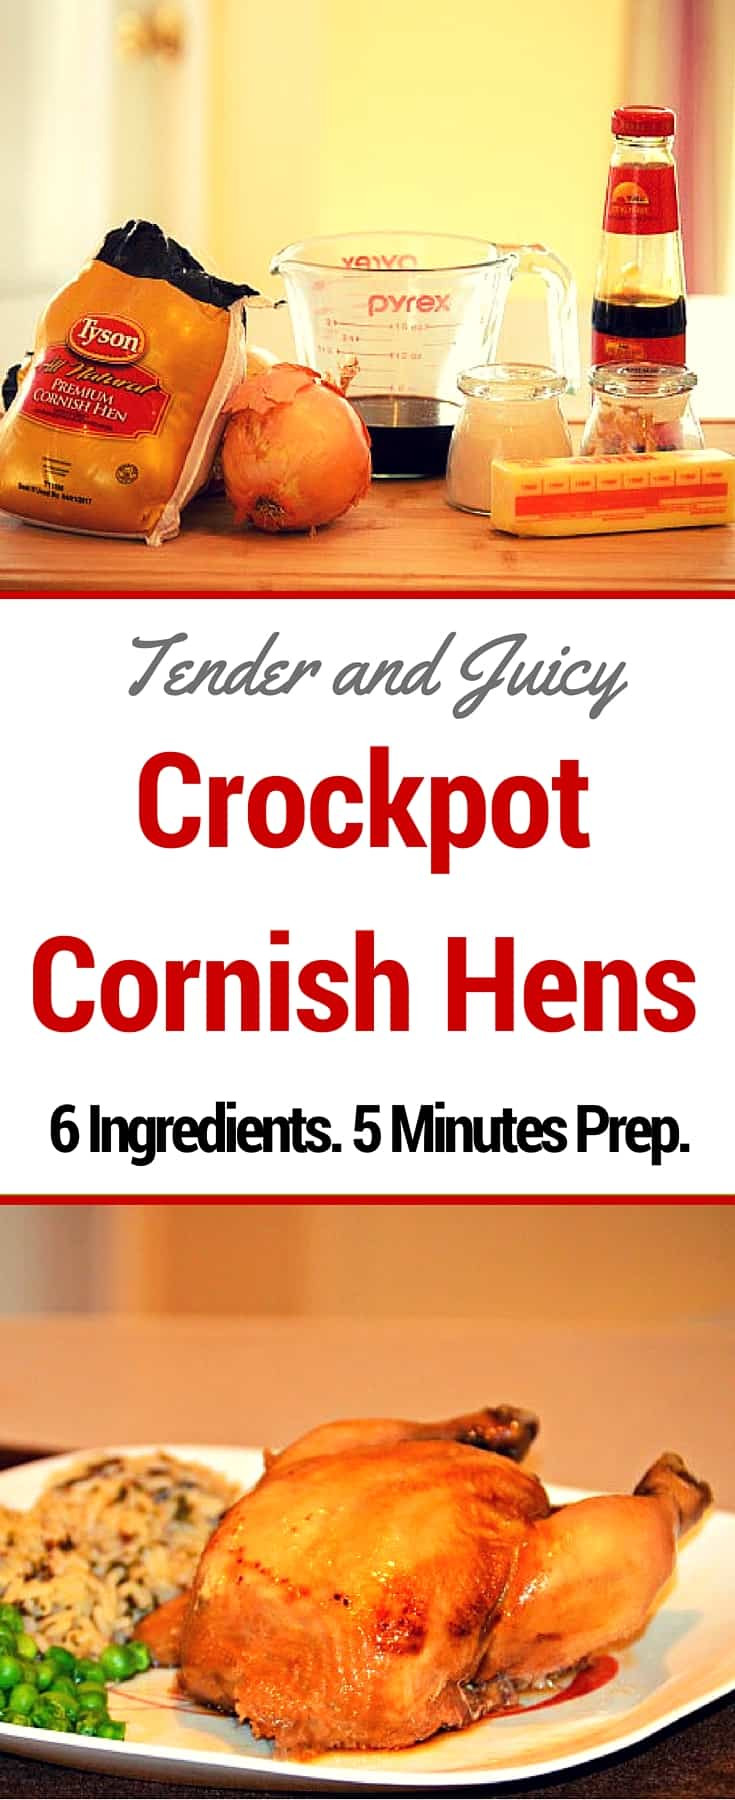 Cornish Game Hens Crock Pot Recipe
 Crockpot Cornish Hens Recipe